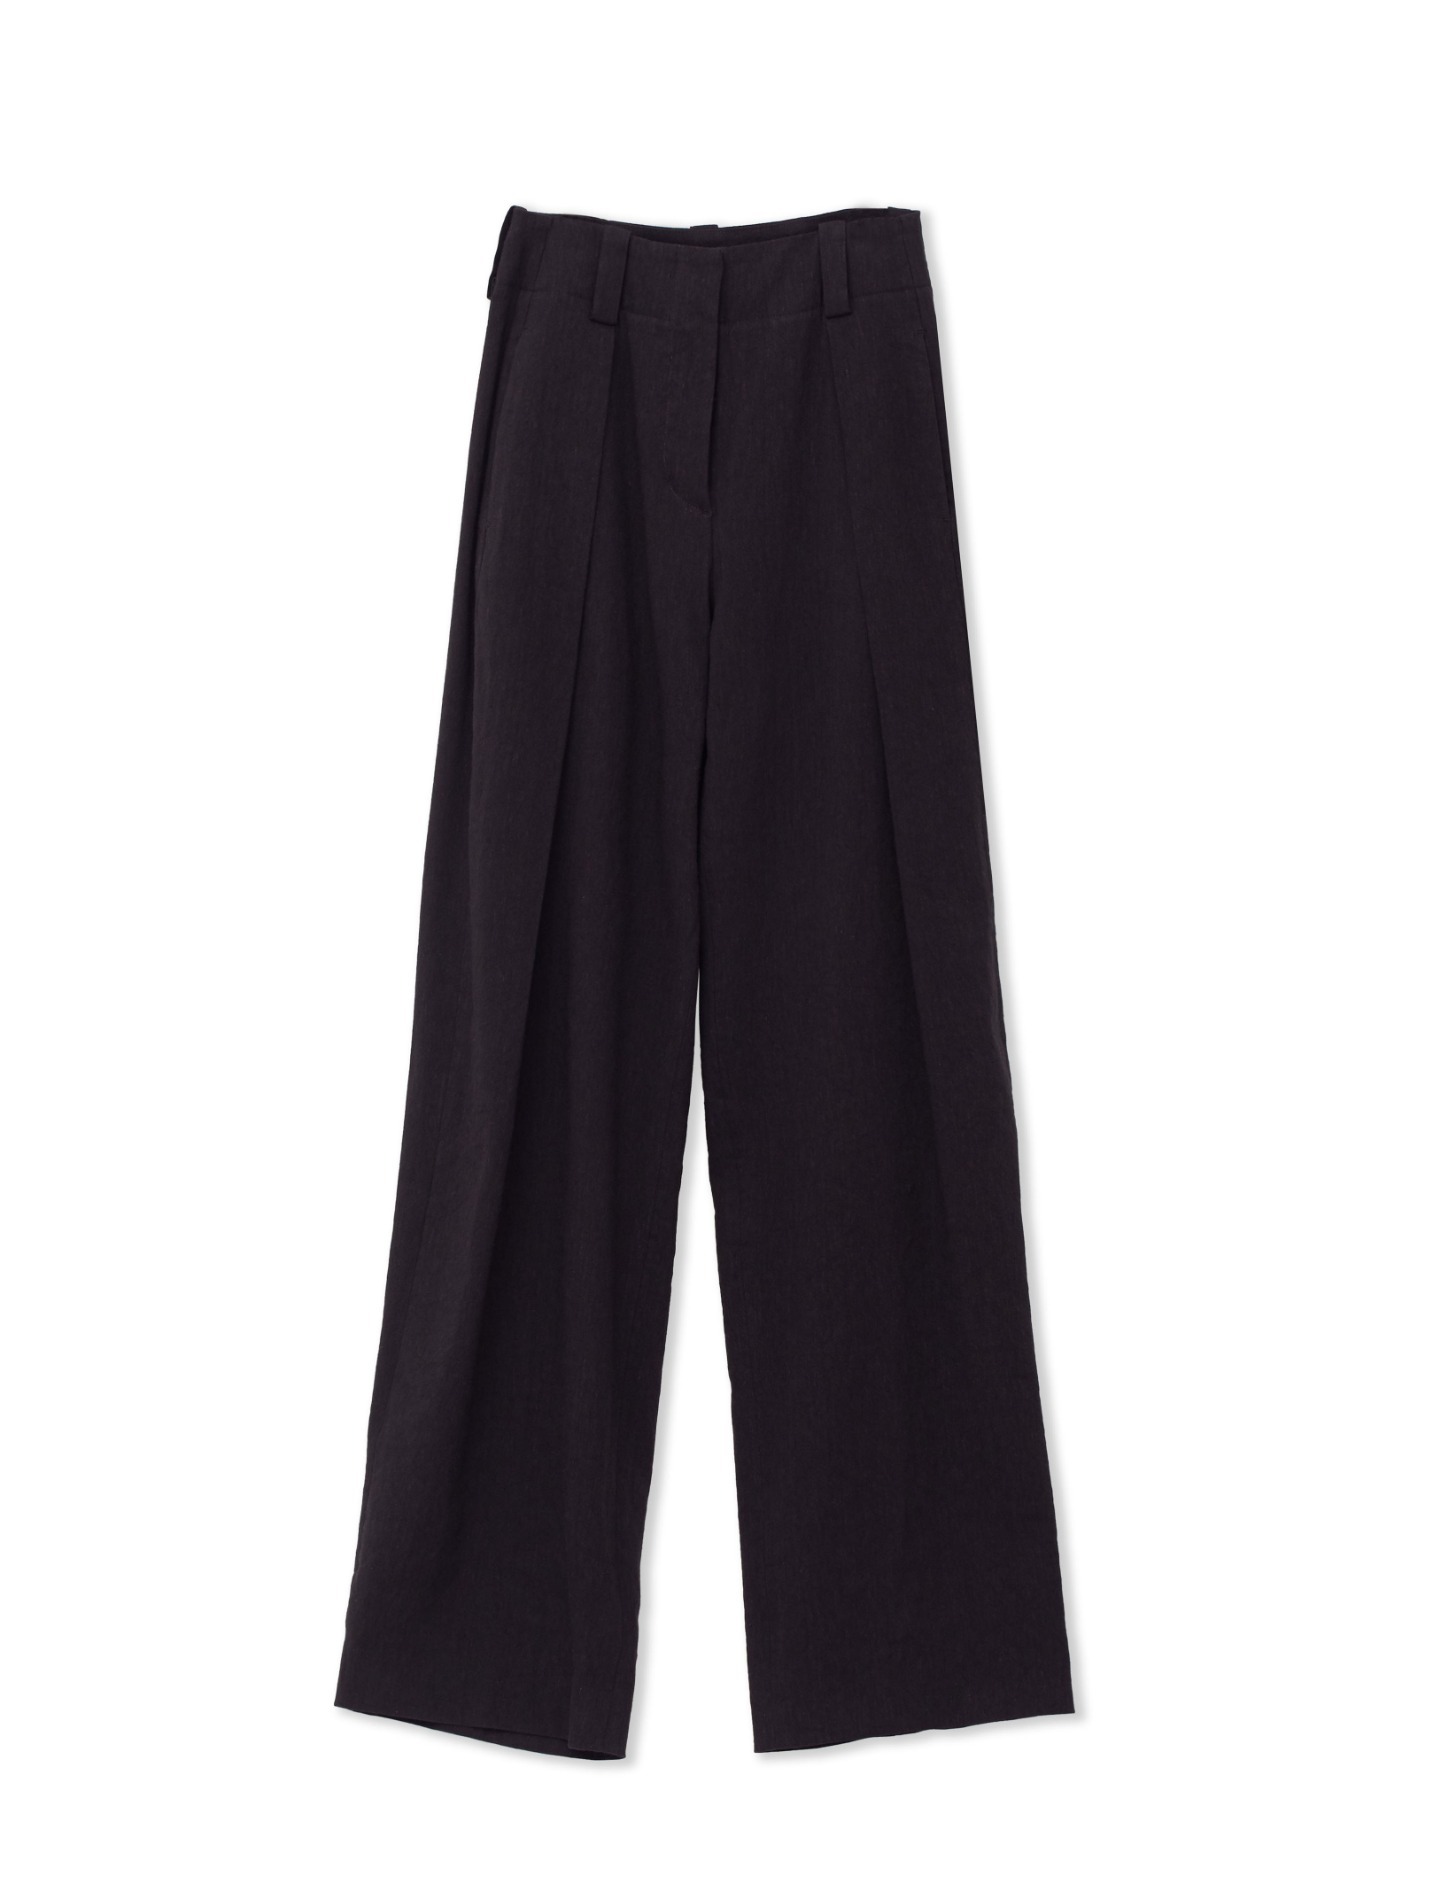 Linen Viscose Trousers (Black)